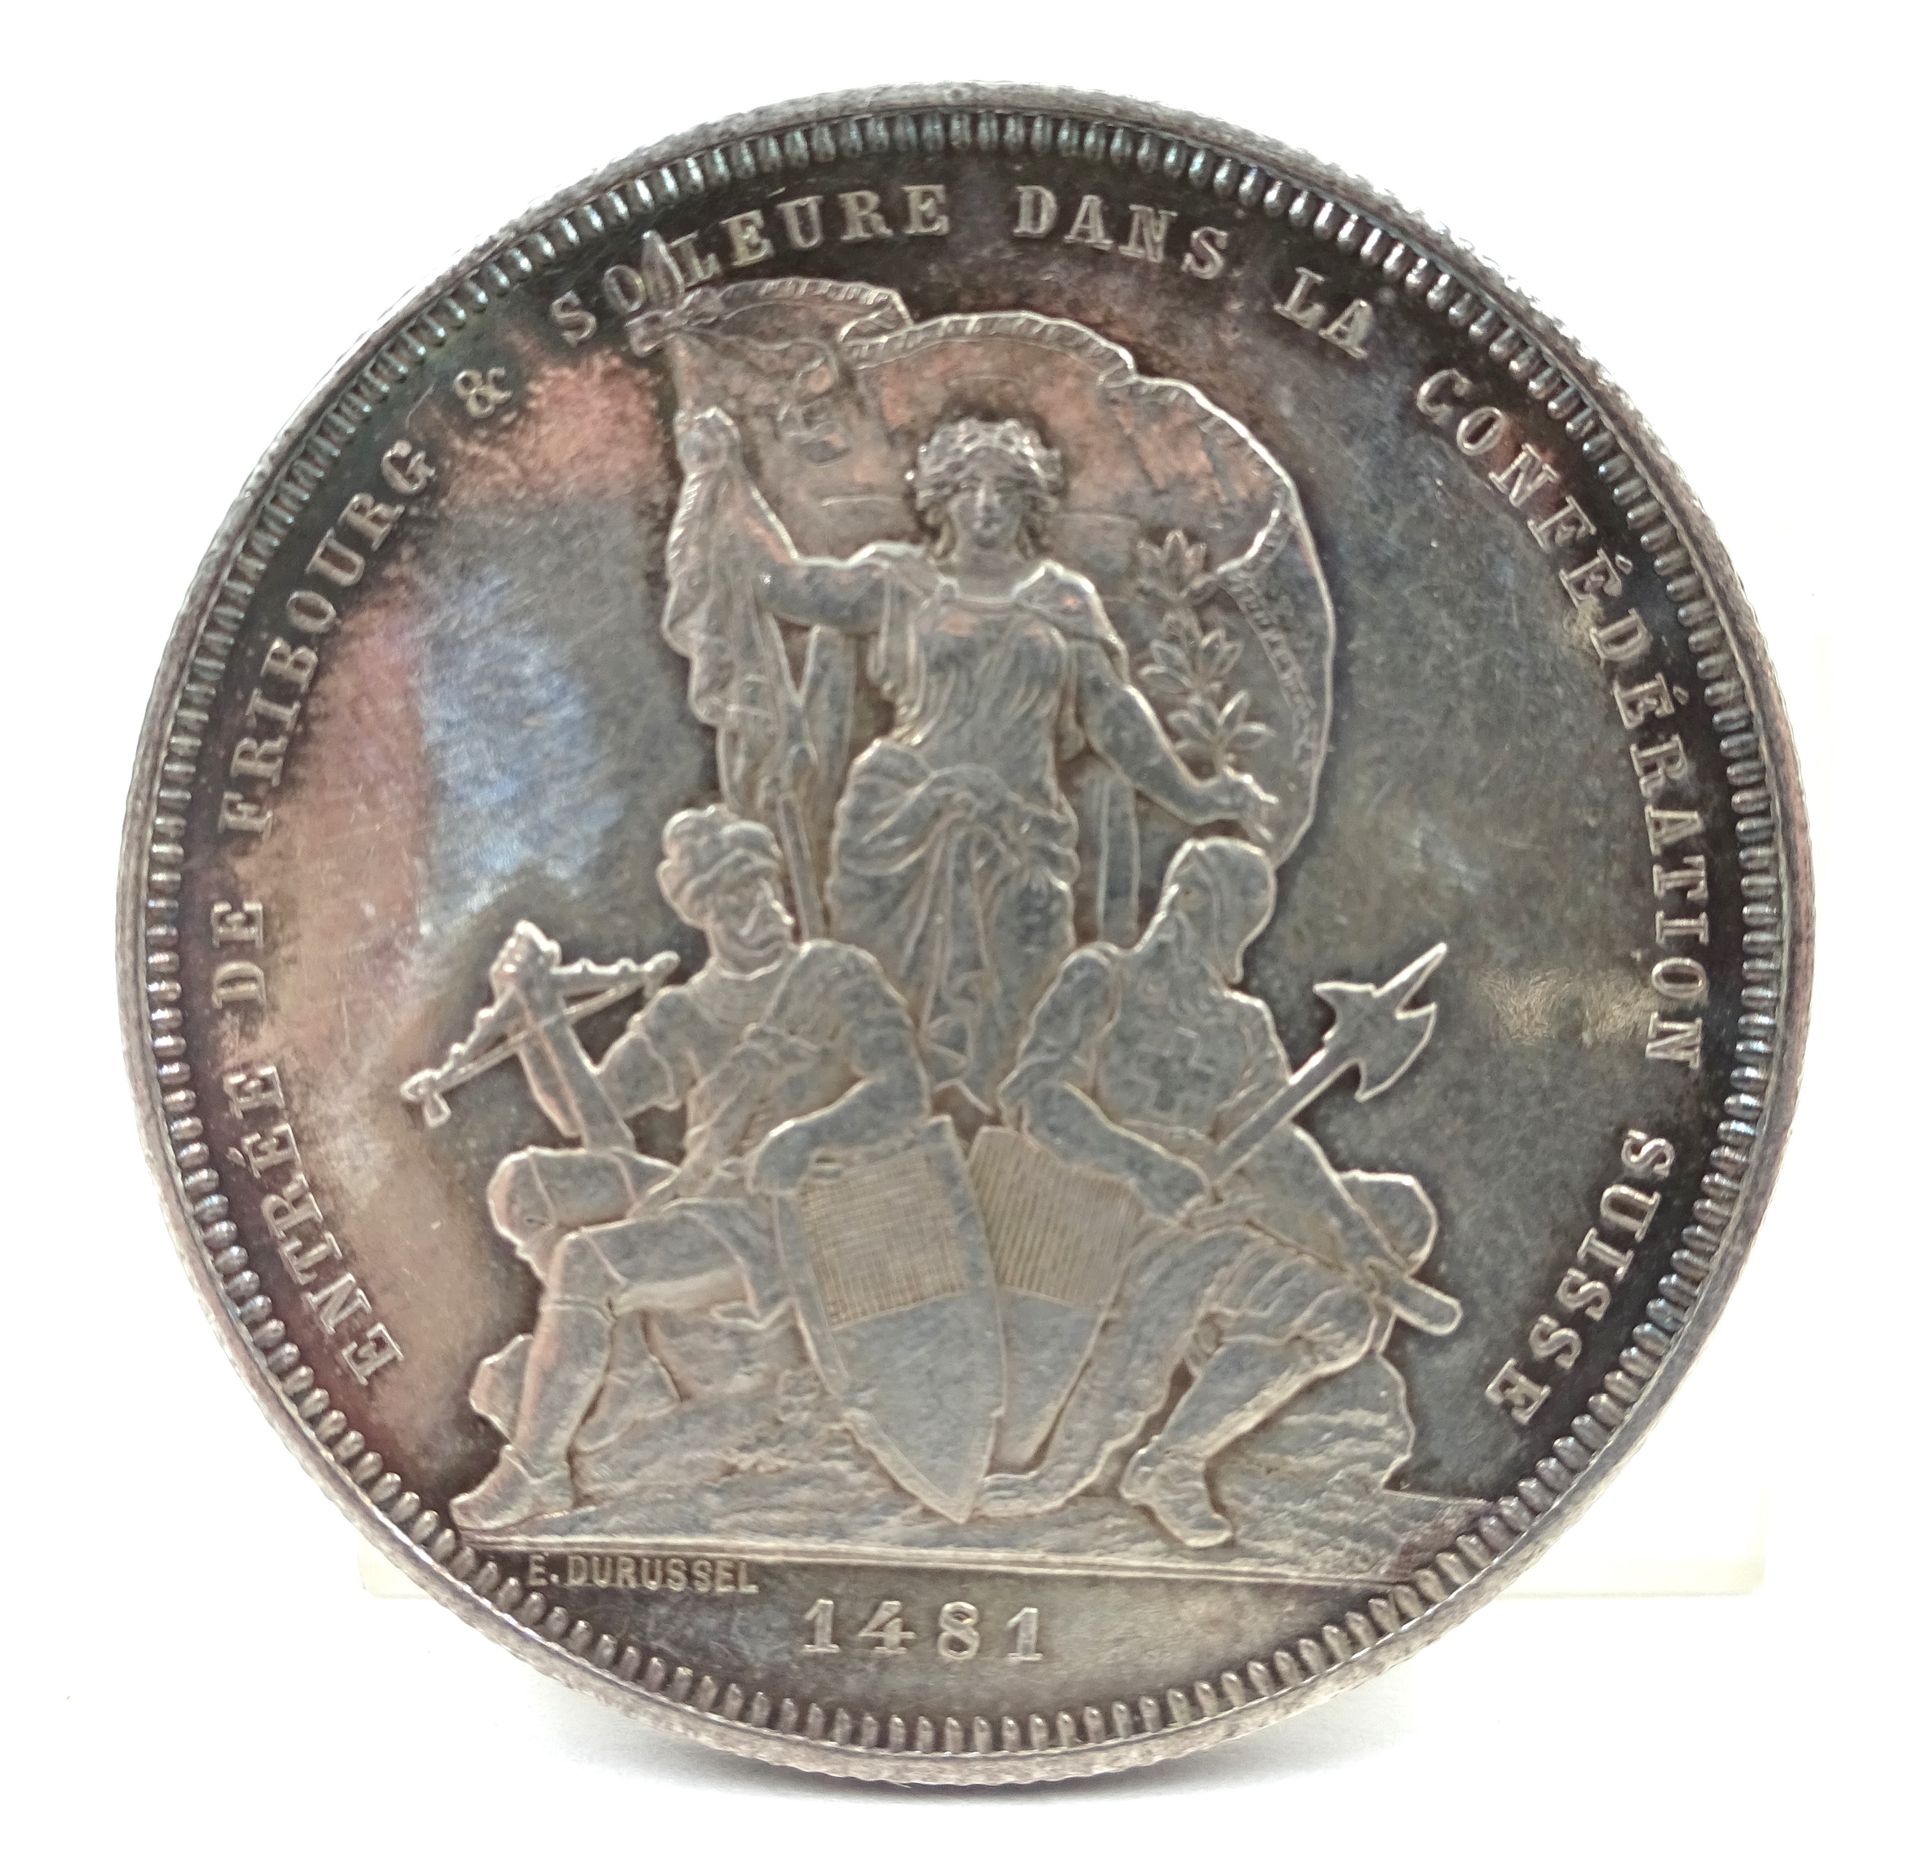 Null 5 Swiss franc silver coin, Tir fédéral à Fribourg, 1881. 24.95 g net.